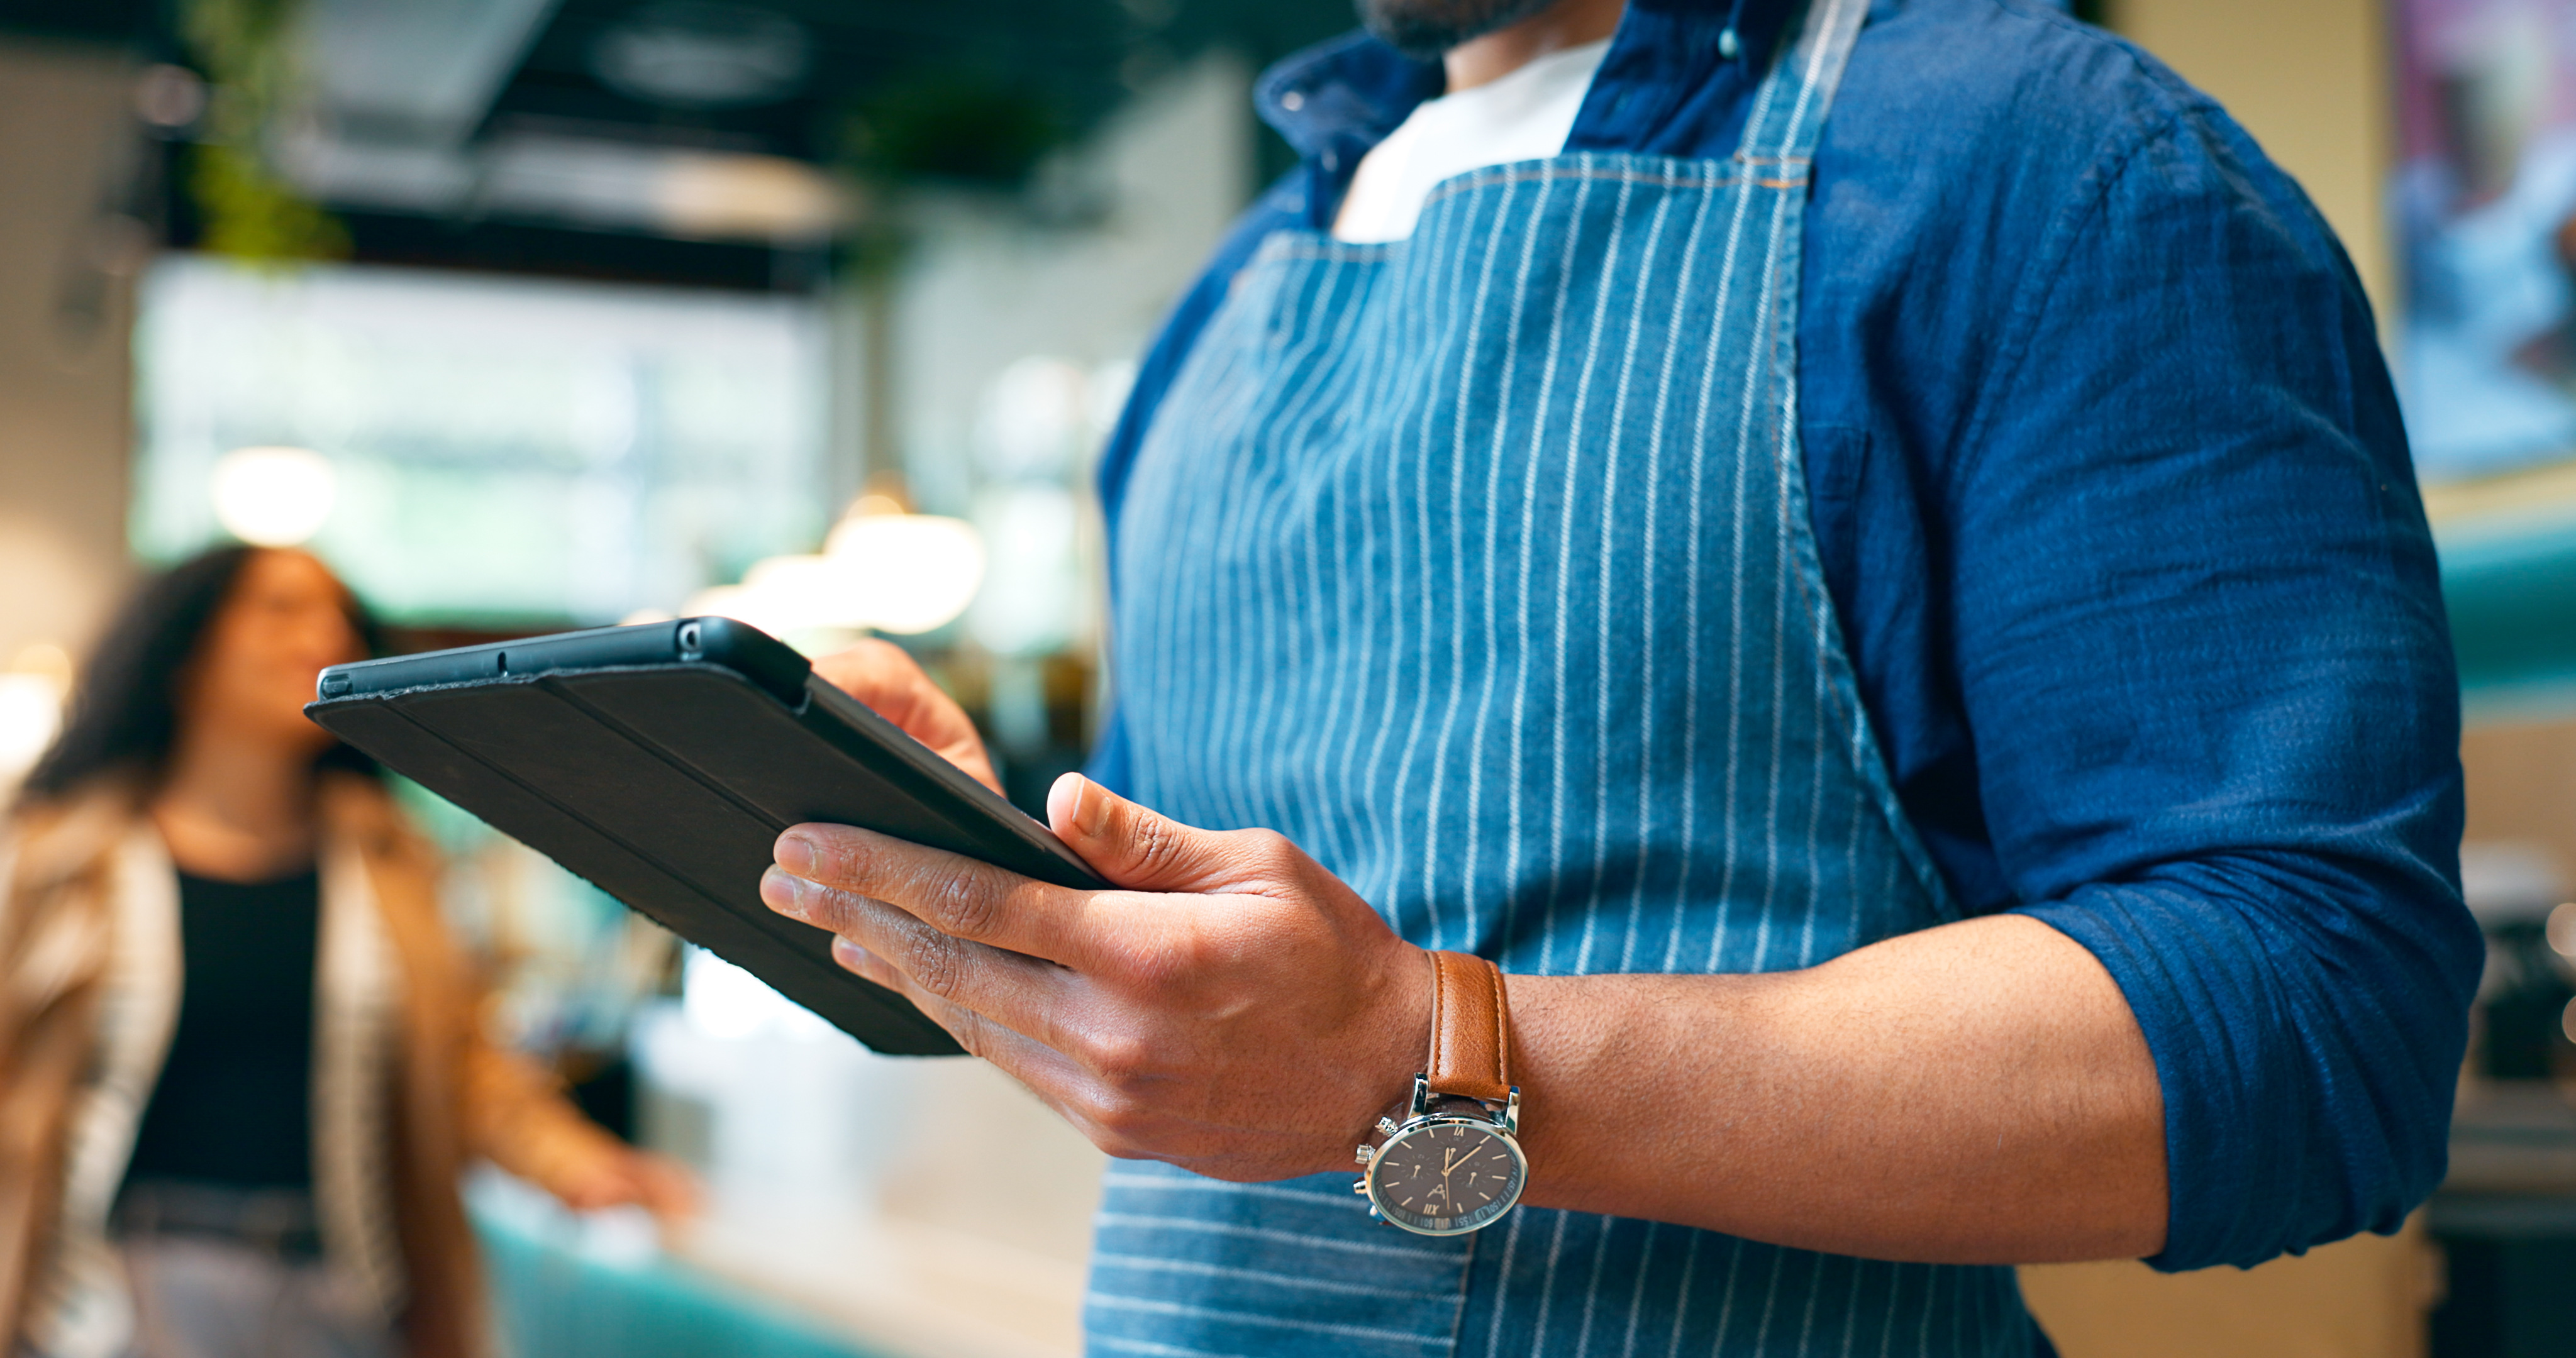 Business owner, hands and tablet for cafe or restaurant marketing